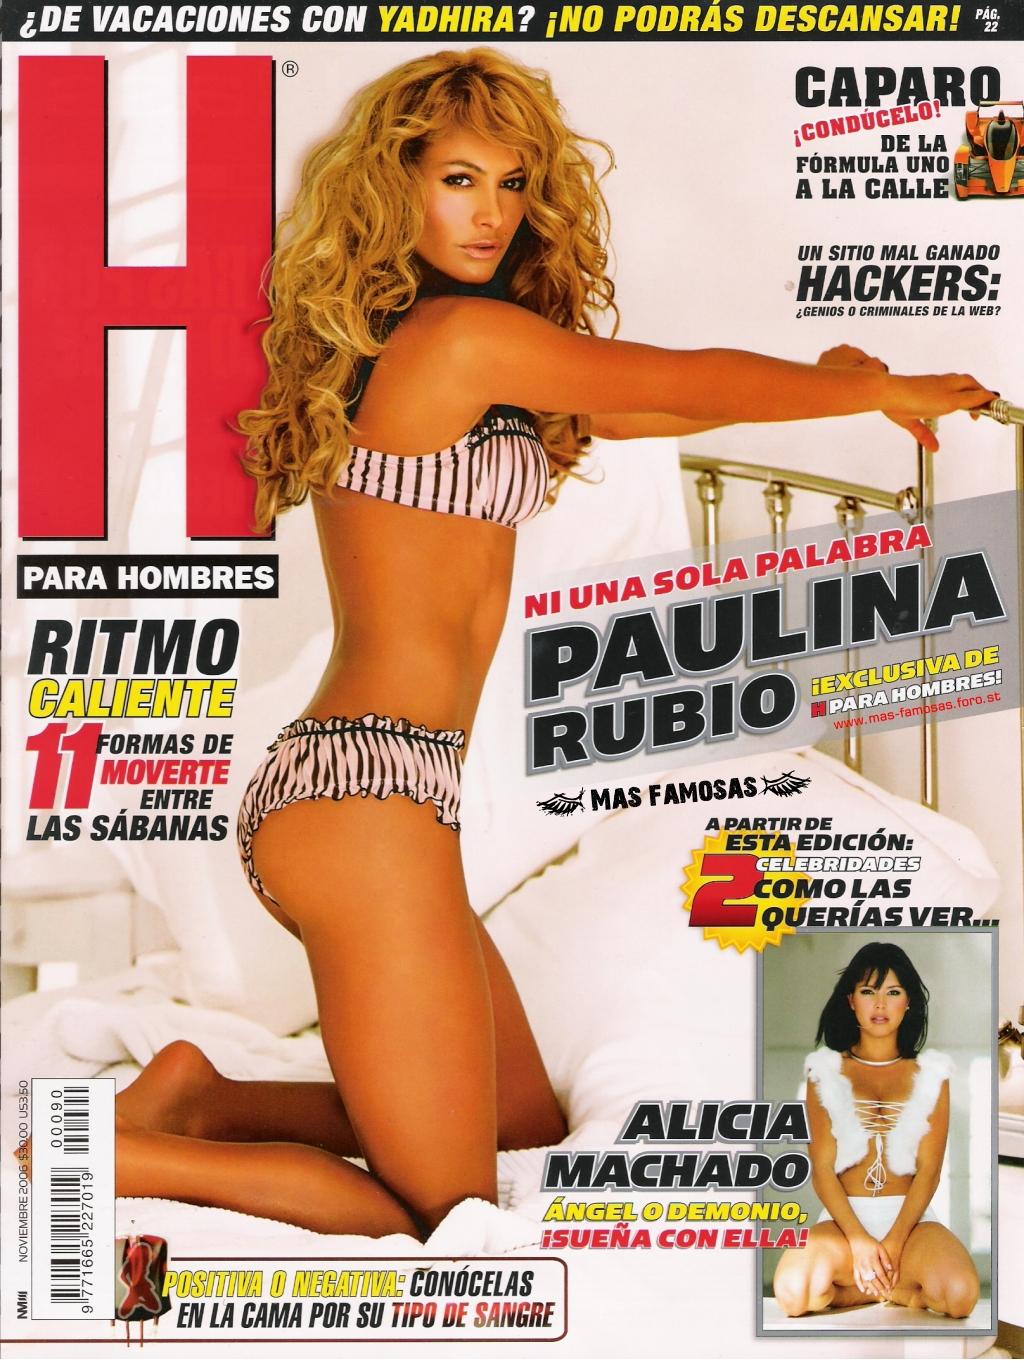 Paulina rubio porn